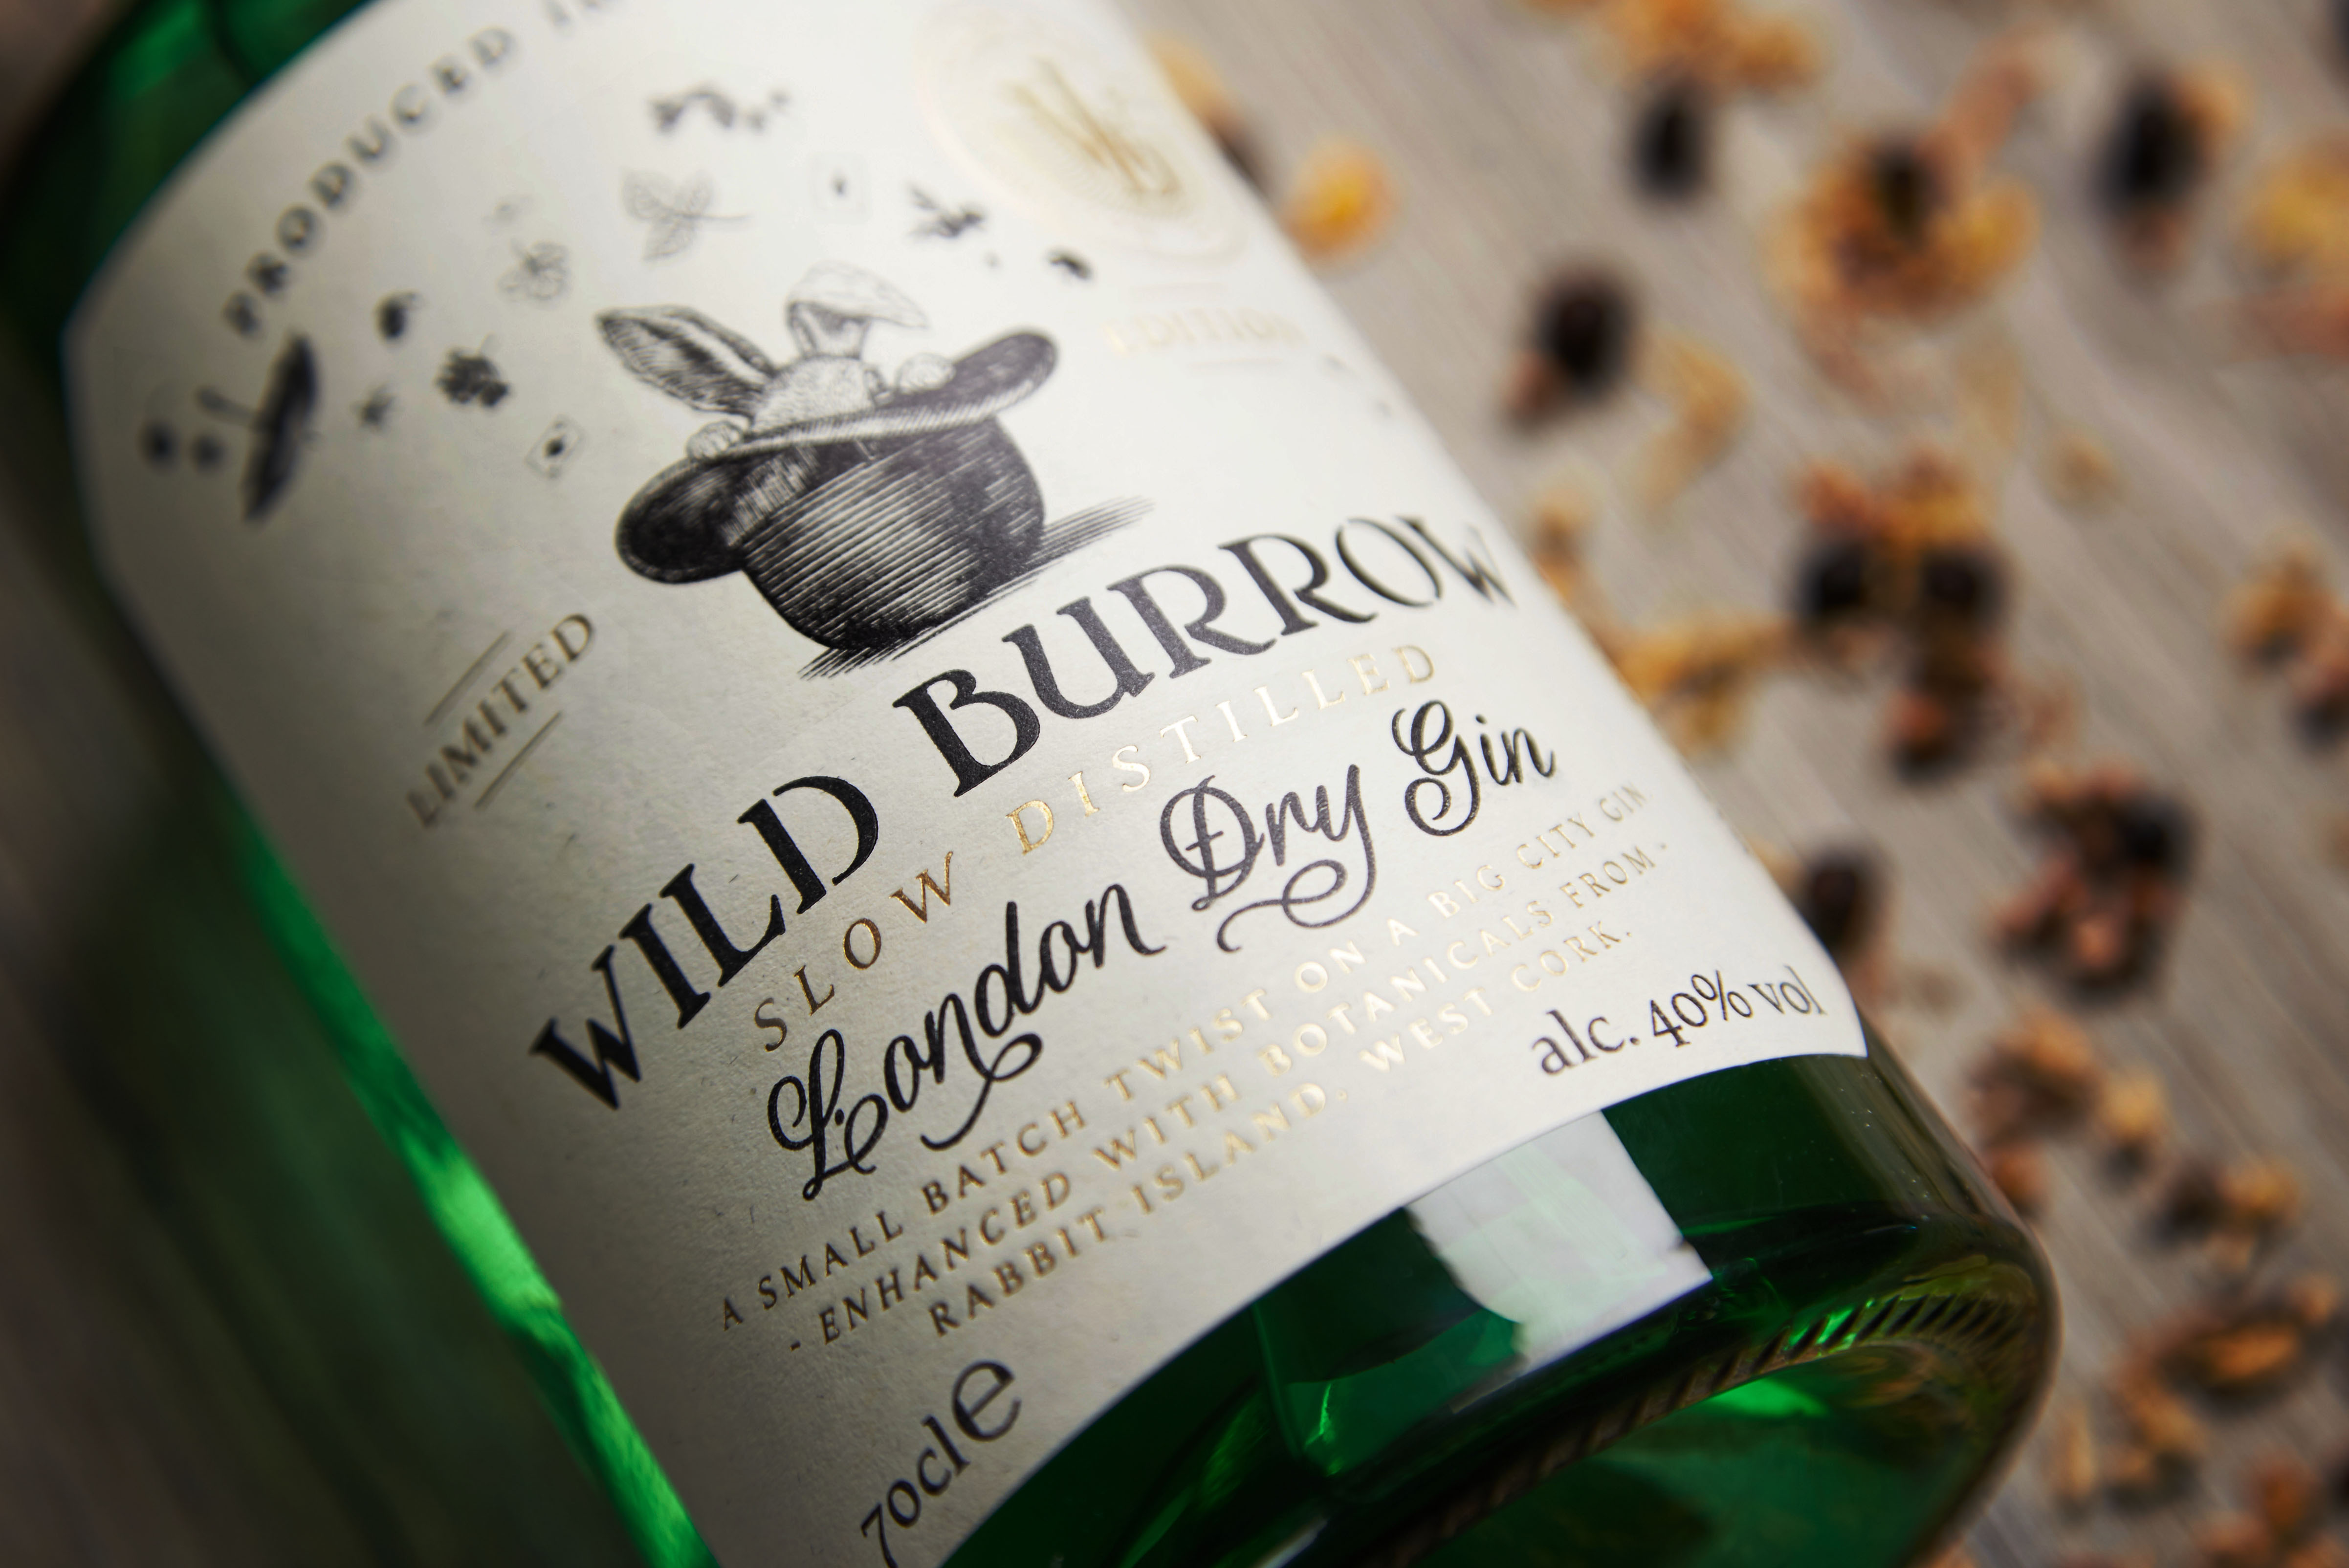 Wild Burrow Gin Range – Archive 100